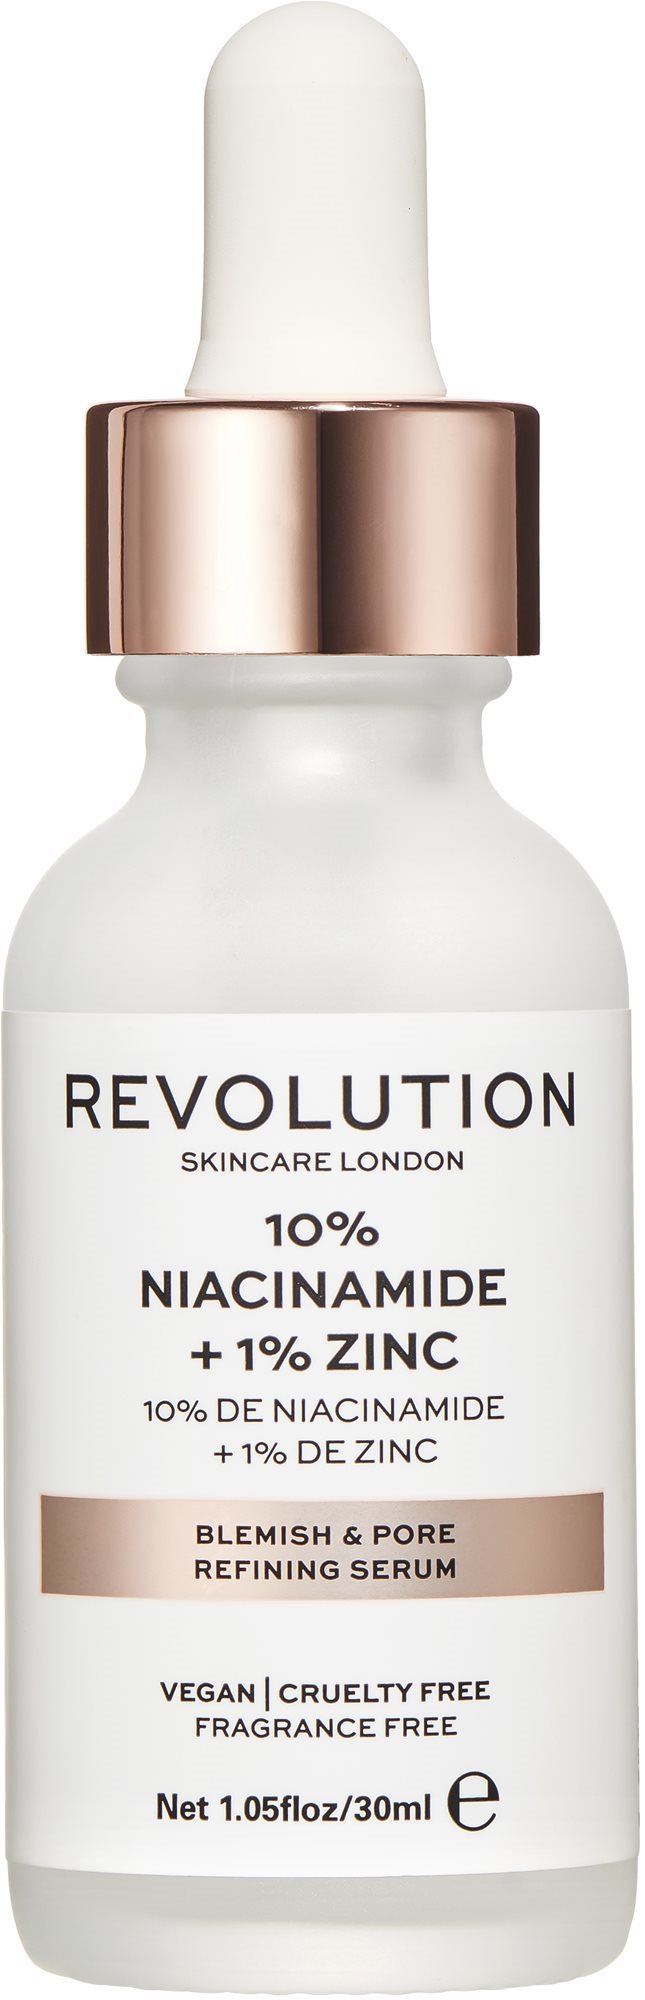 REVOLUTION SKINCARE Blemish and Pore Refining Serum - 10% Niacinamide + 1% Zinc 30 ml